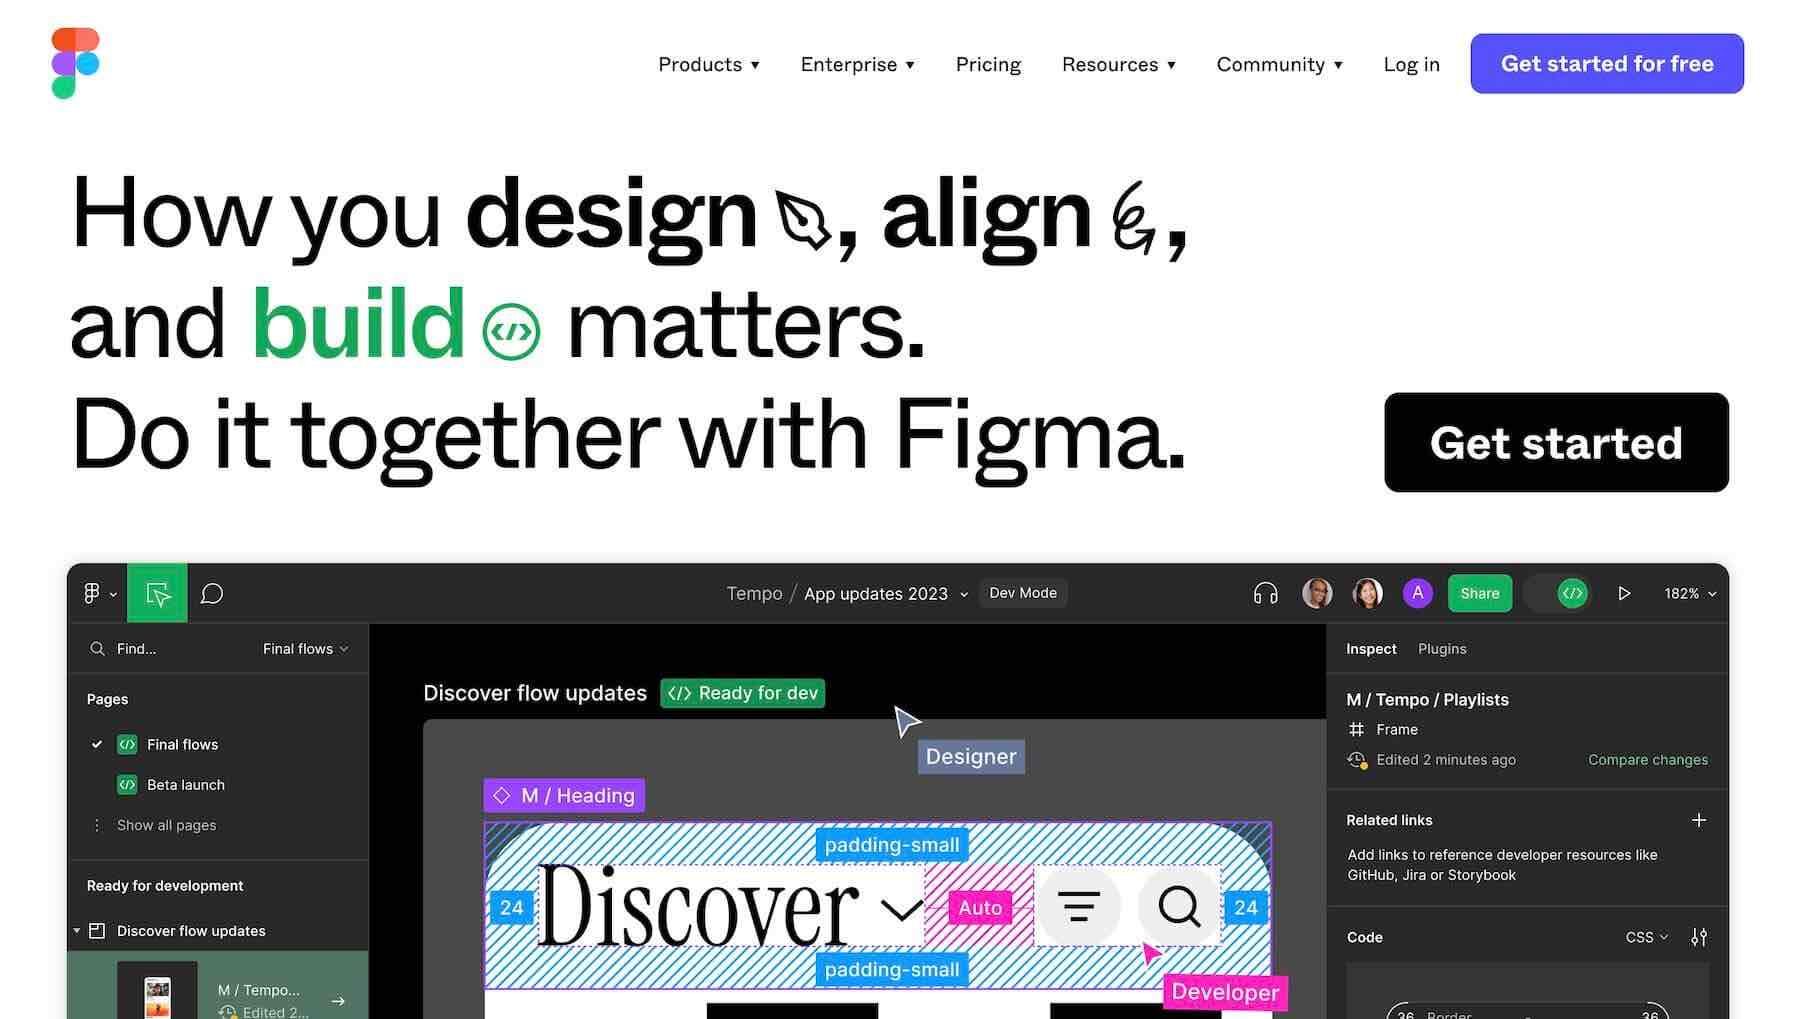 Figma website screenshot